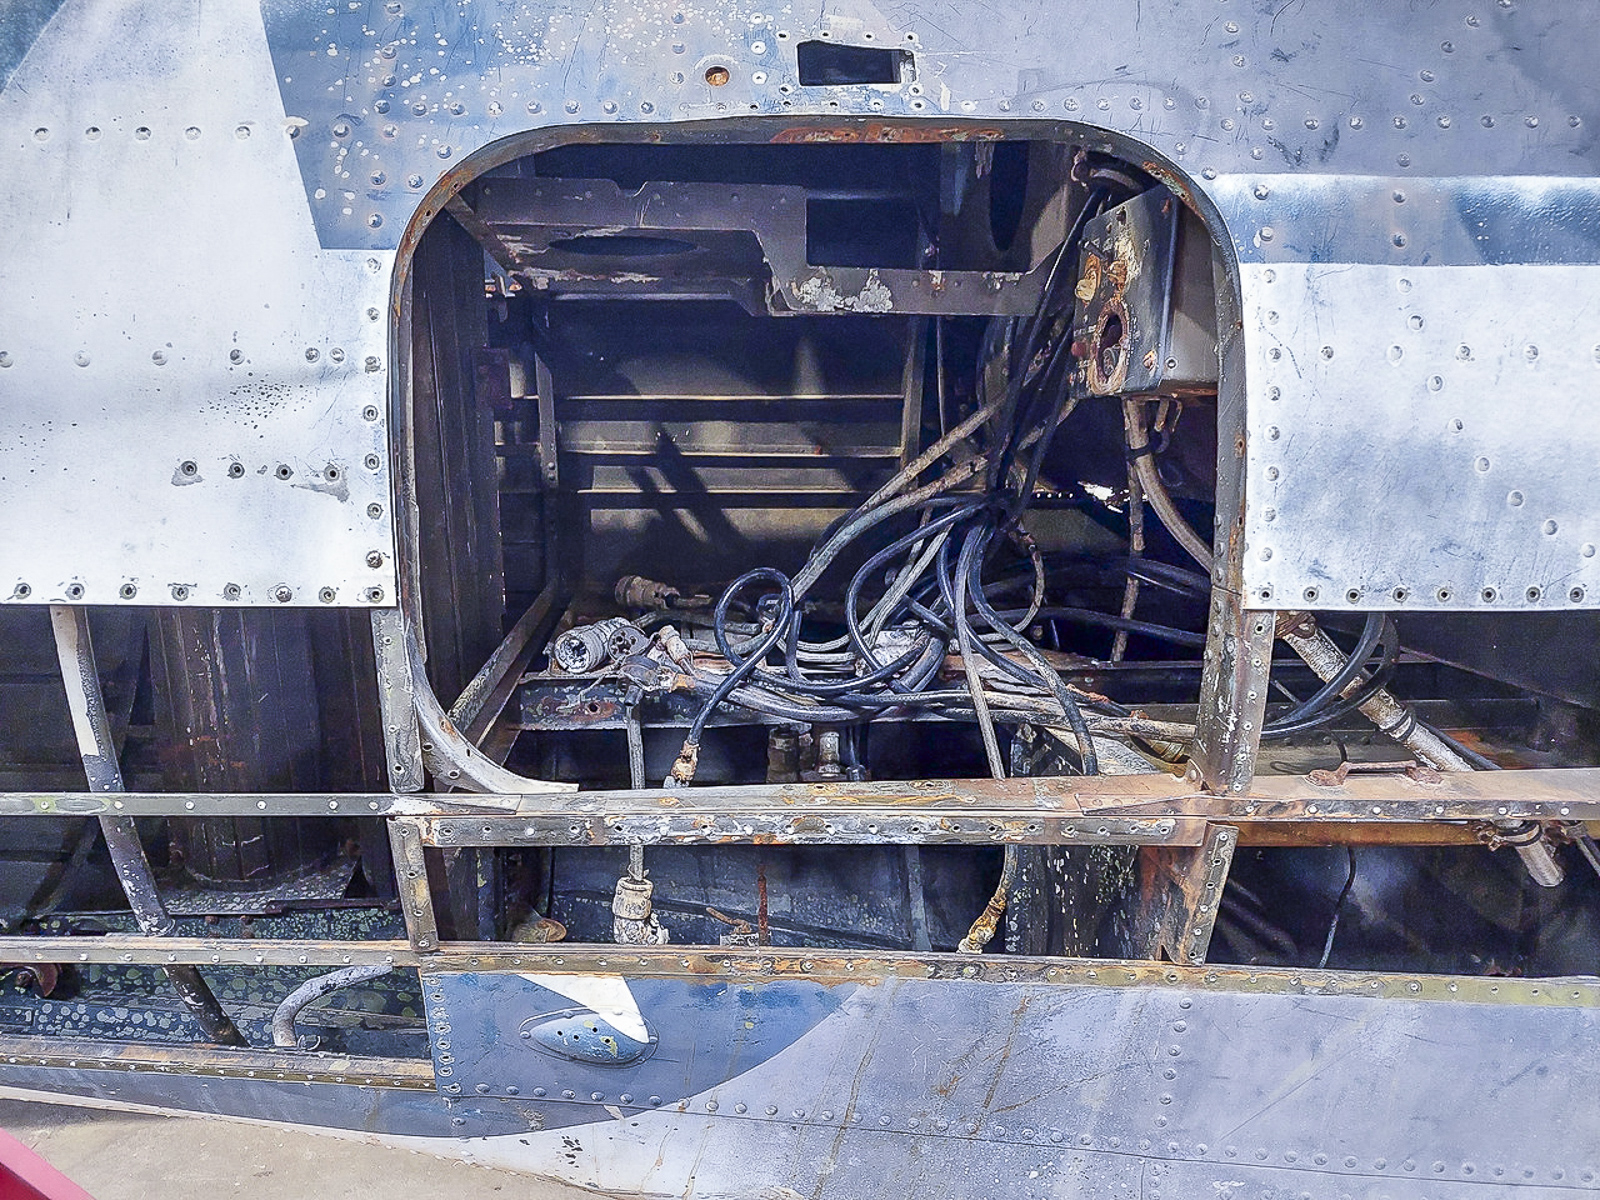 Douglas SBD Dauntless fuselage view prior to strip down.